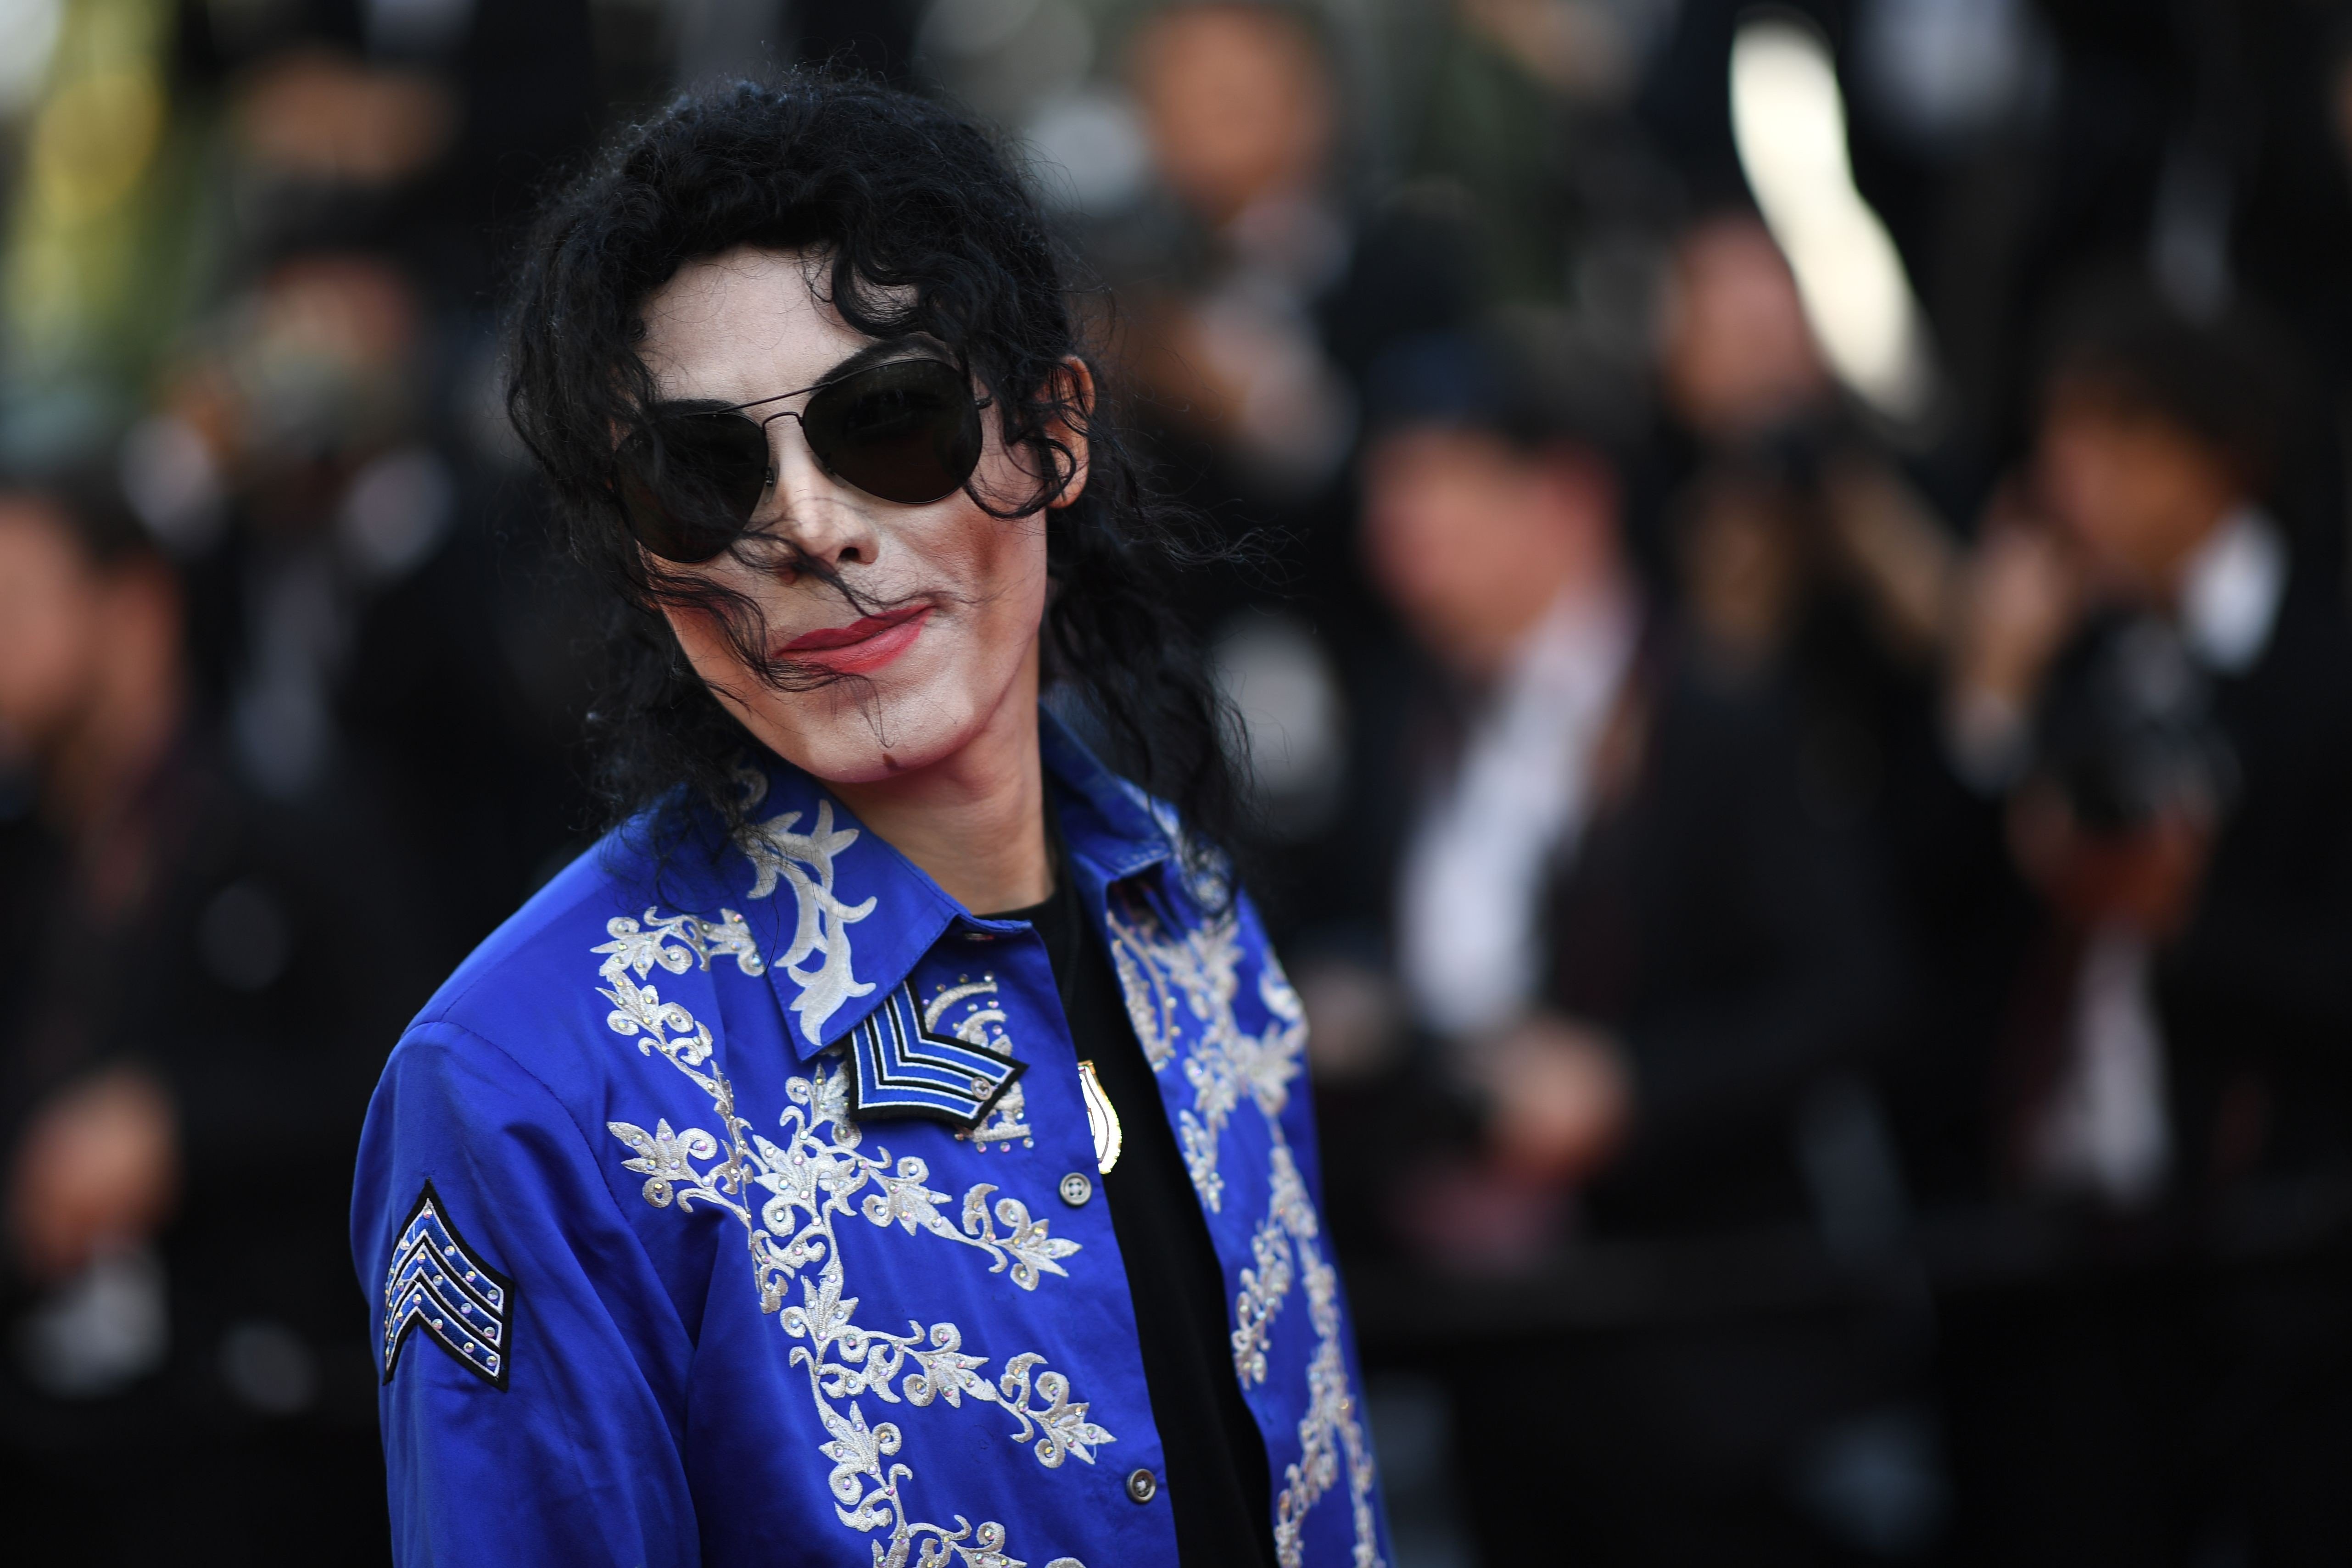 Michael Jackson's 10 Most Iconic Looks